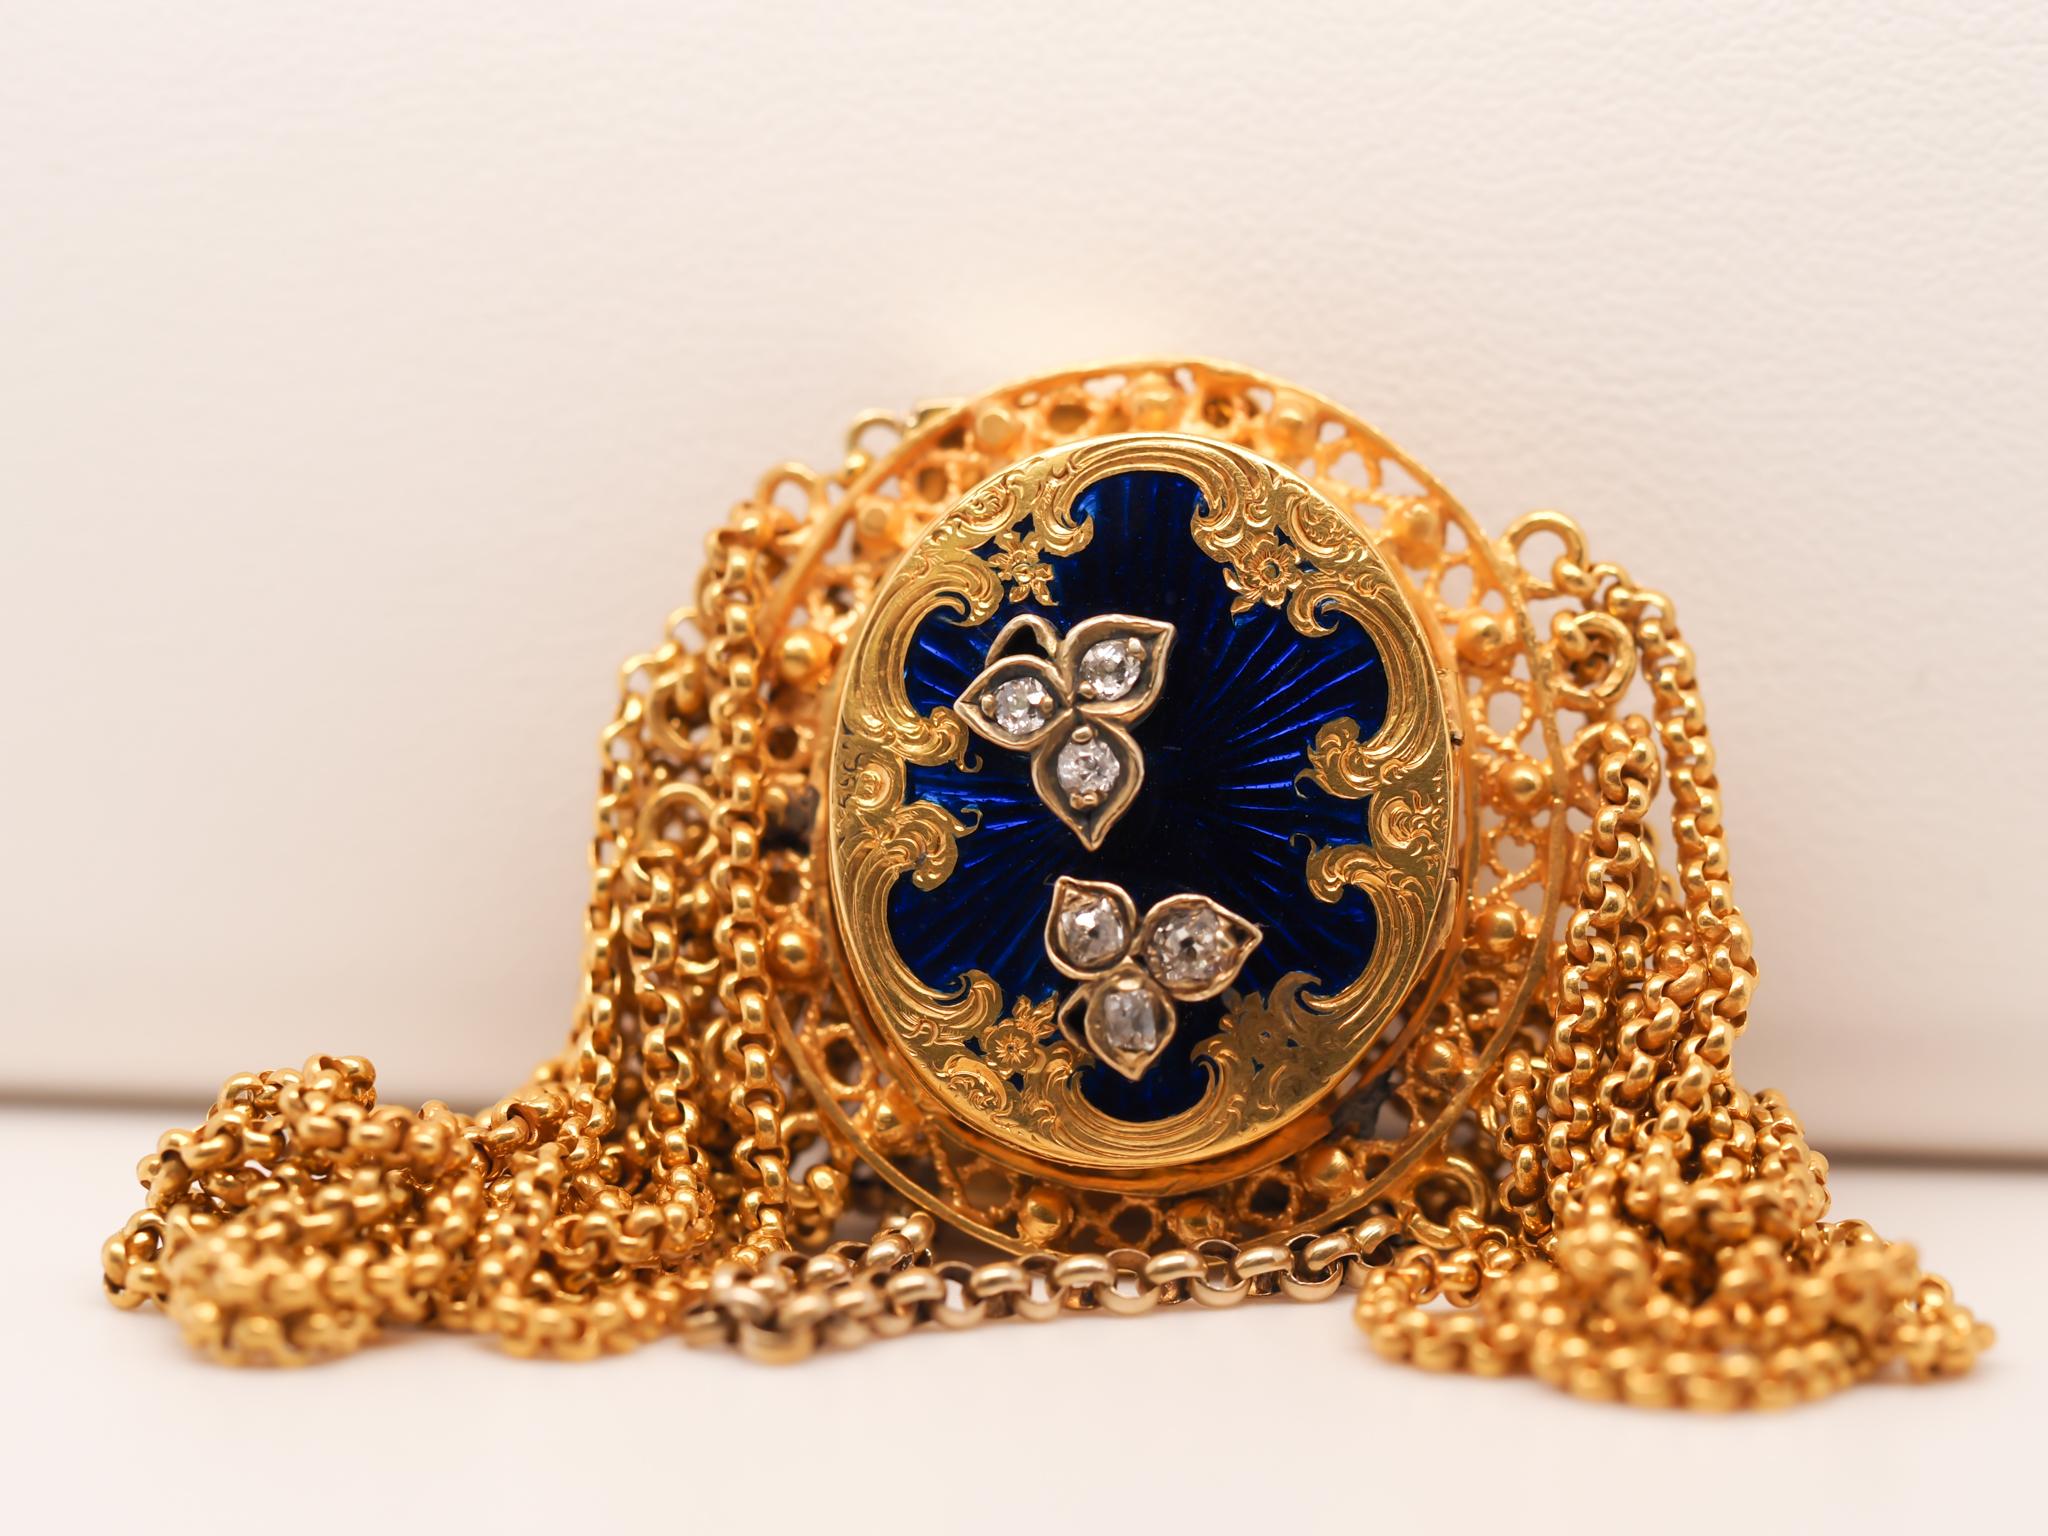 Edwardian Circa 1900s 18 Karat Yellow Gold Enamel and Diamond Secret Locket Bracelet For Sale